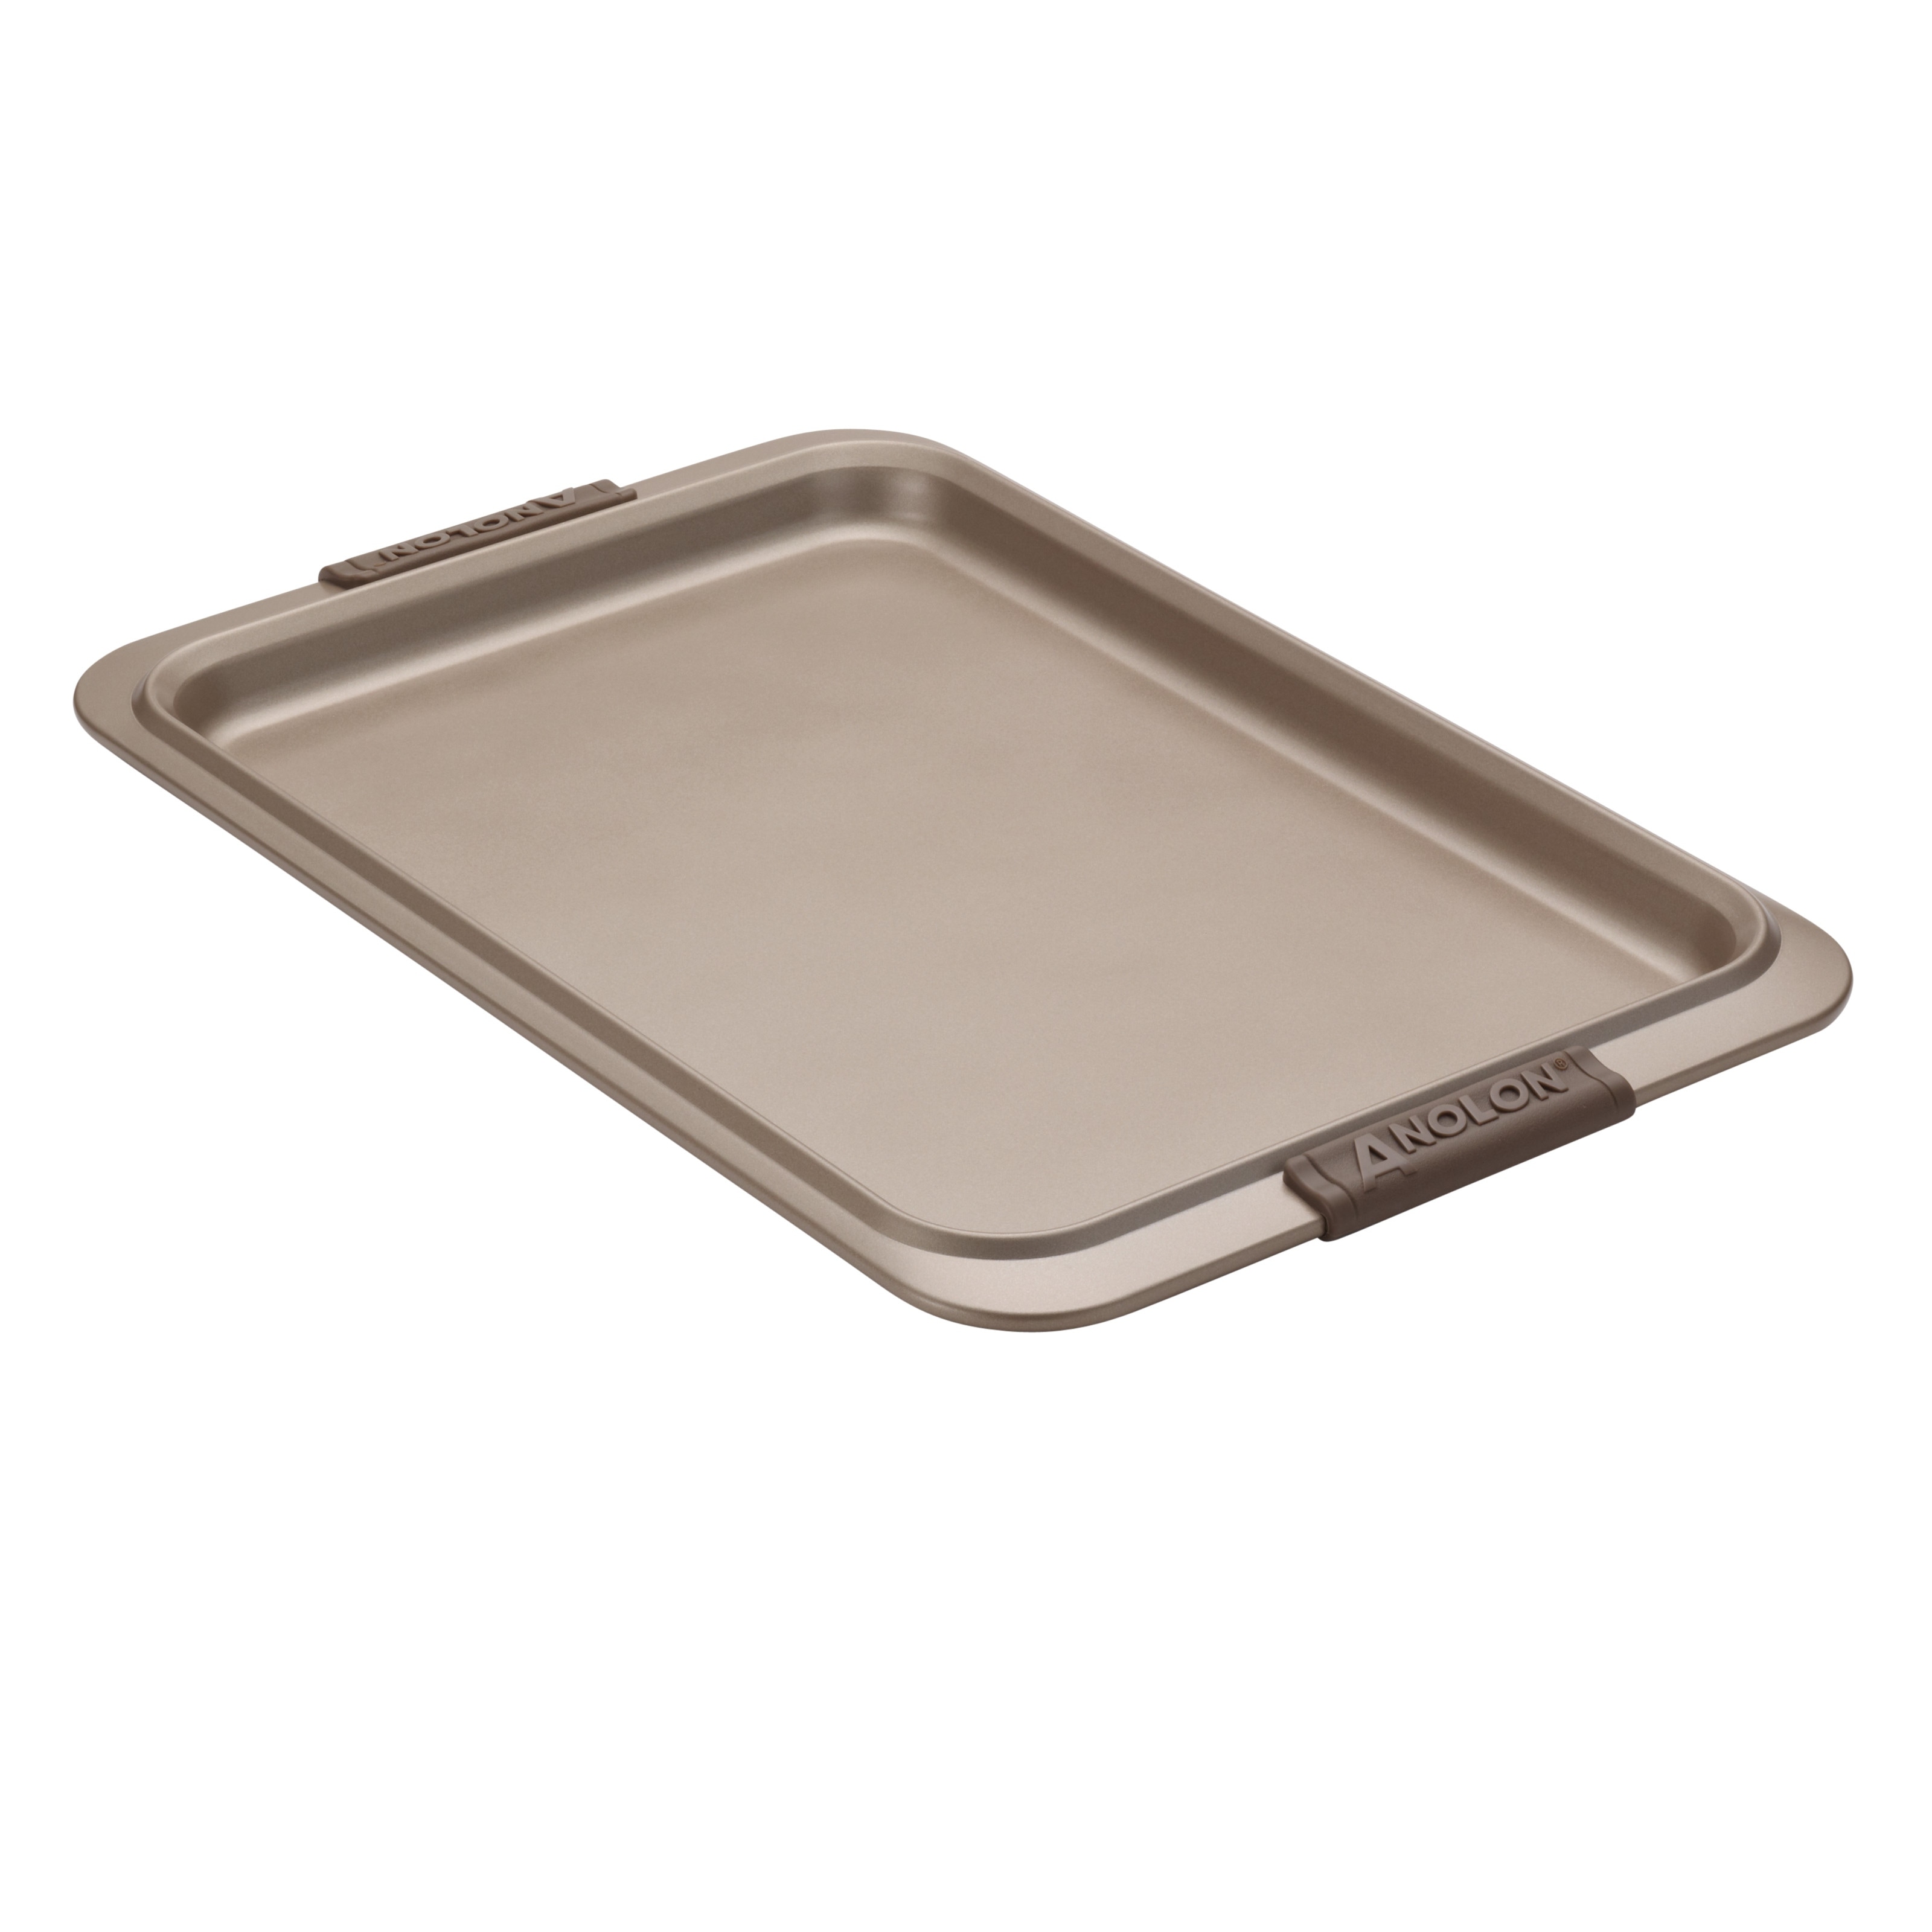 Anolon Advanced Bronze Bakeware 10-Inch x 15-inch Cookie Sheet